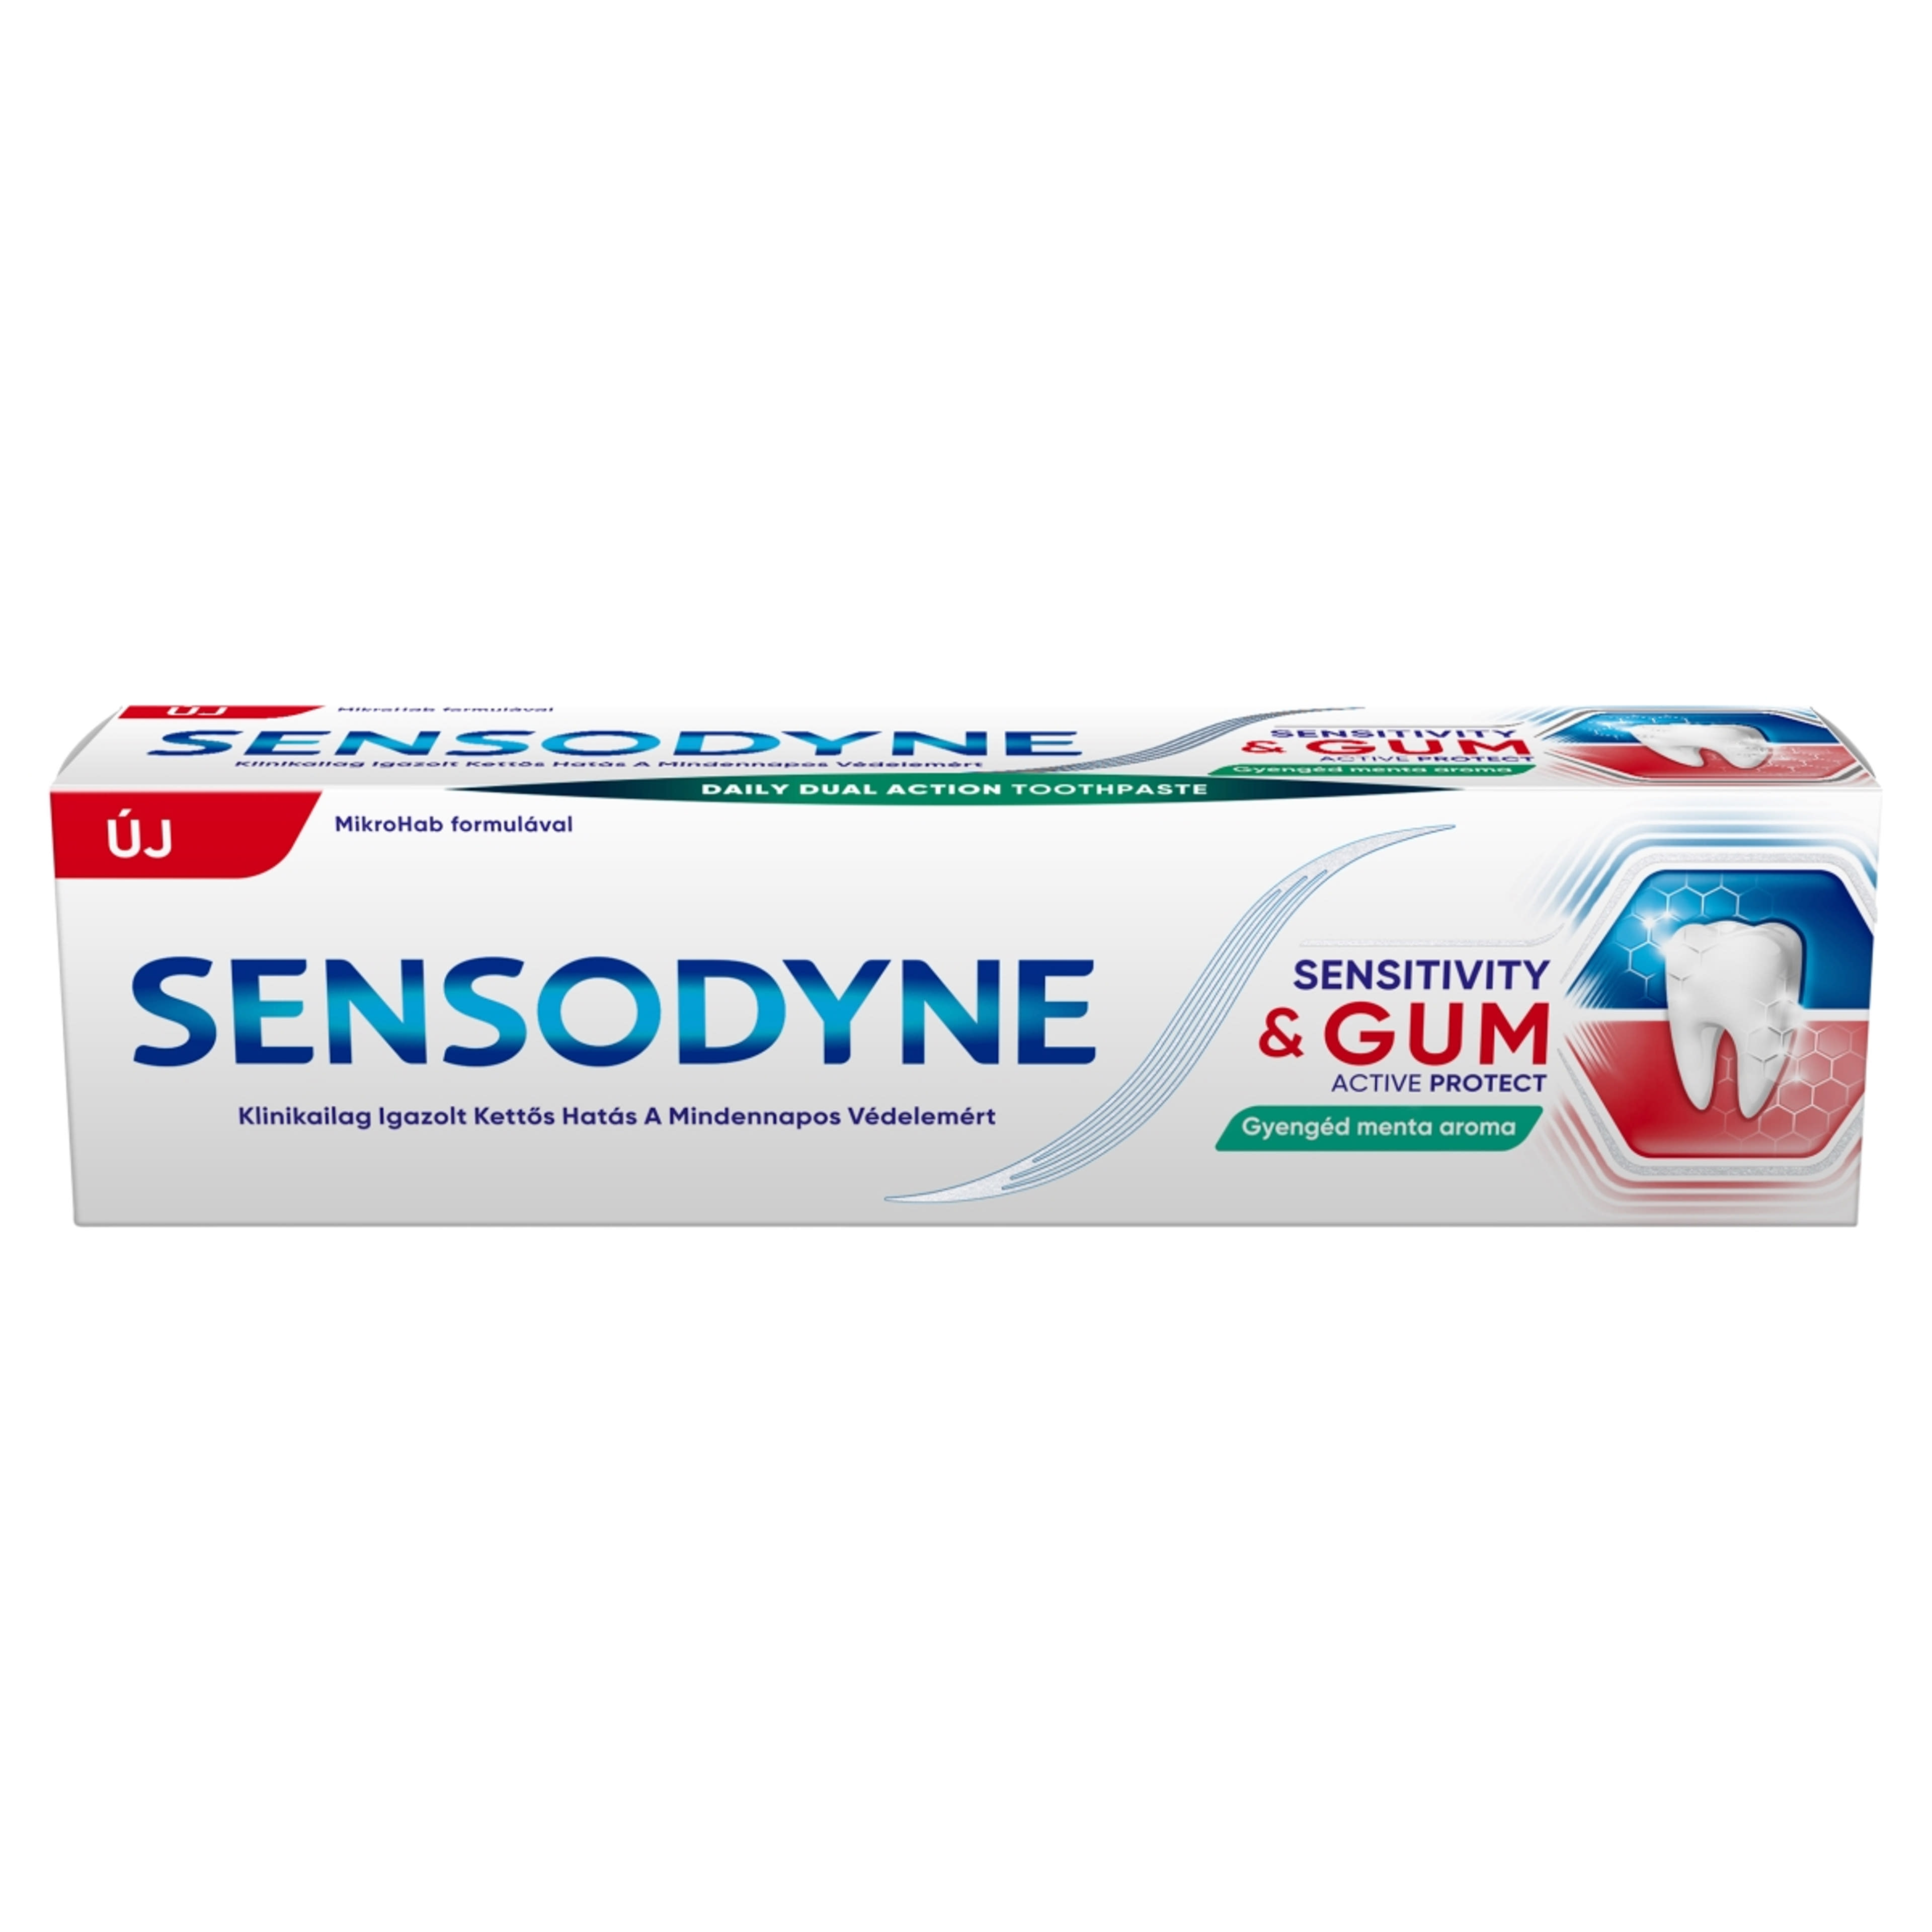 Sensodyne Sensitivity & Gum fogkrém - 75 ml-1